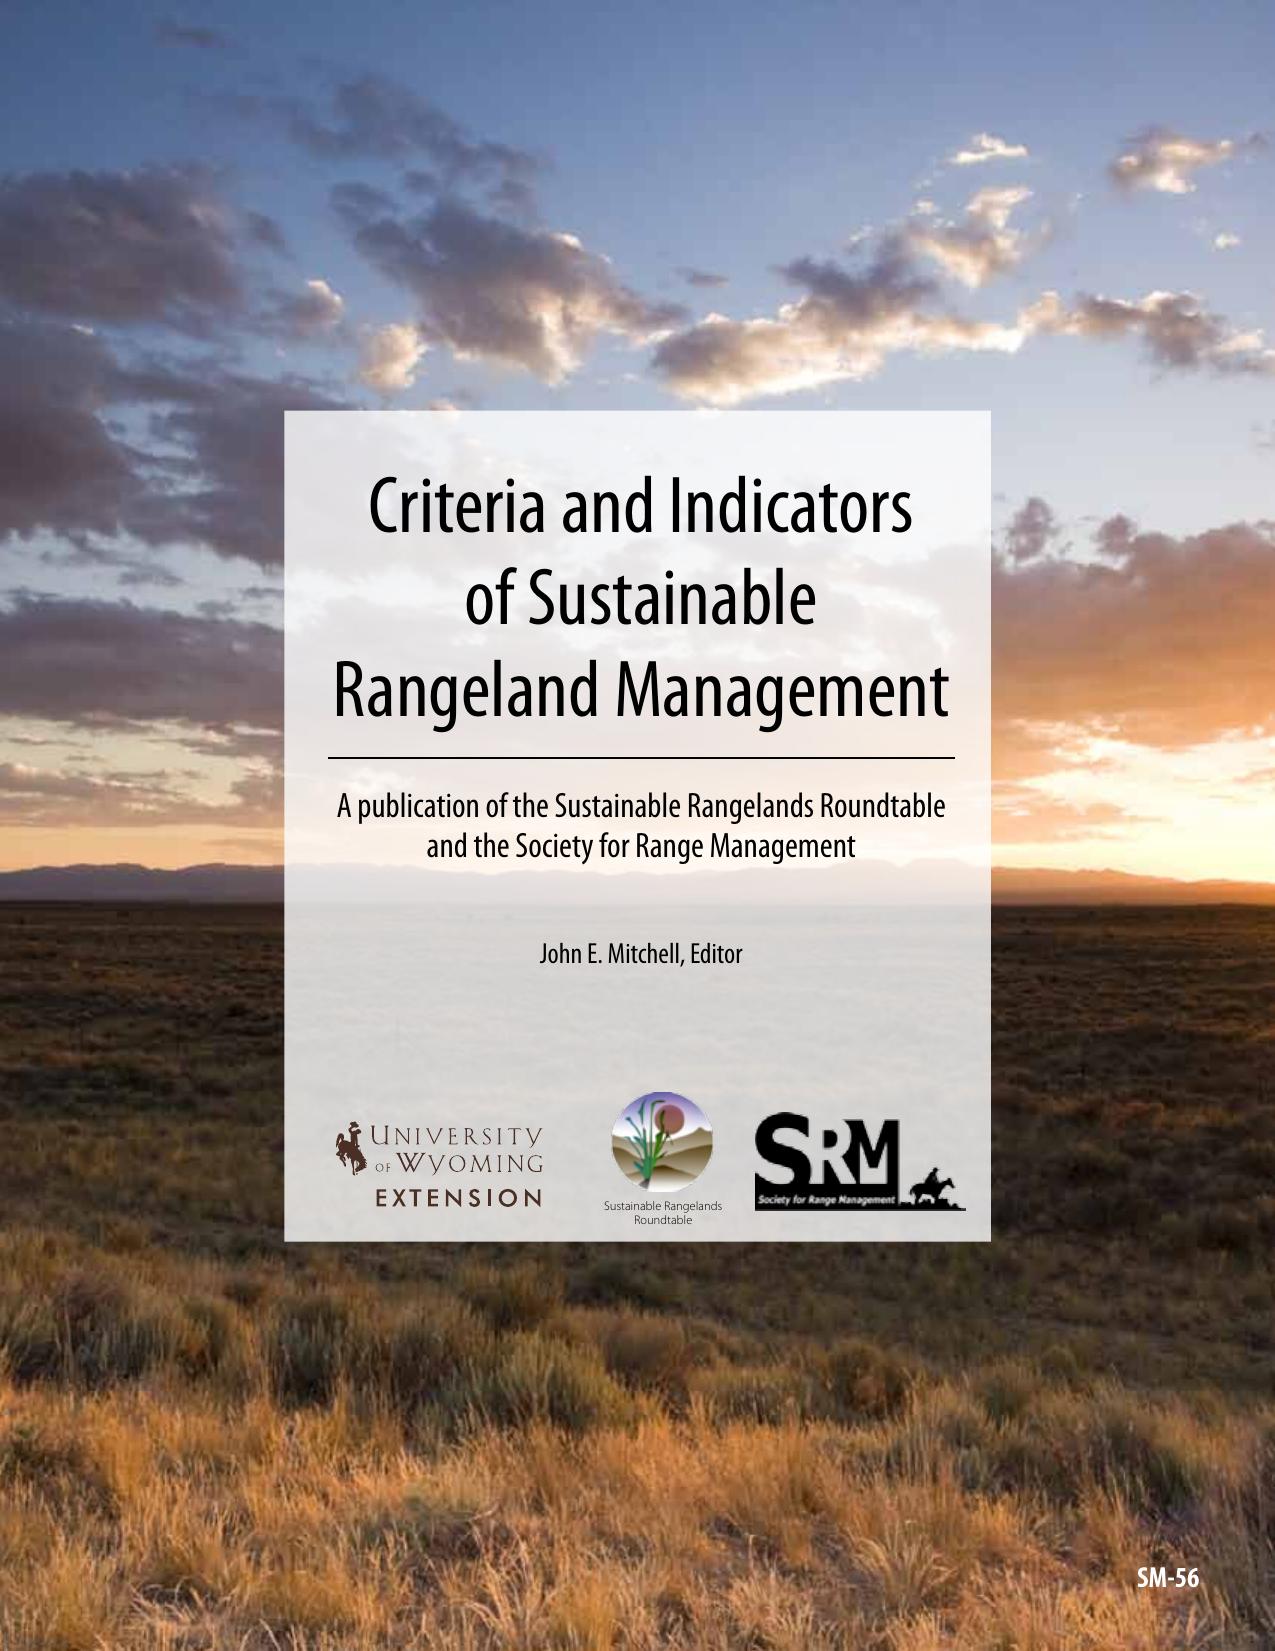 Criteria and Indicators of Sustainable Rangeland Management 2010